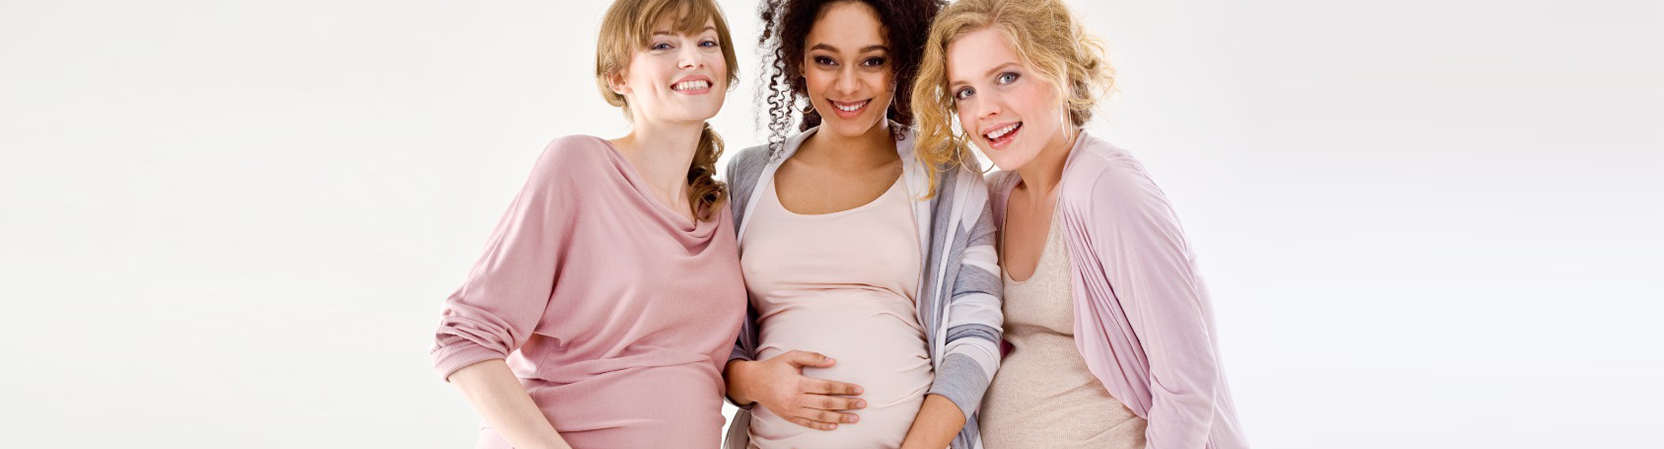 Atelier hypnose grossesse I : bien vivre votre grossesse